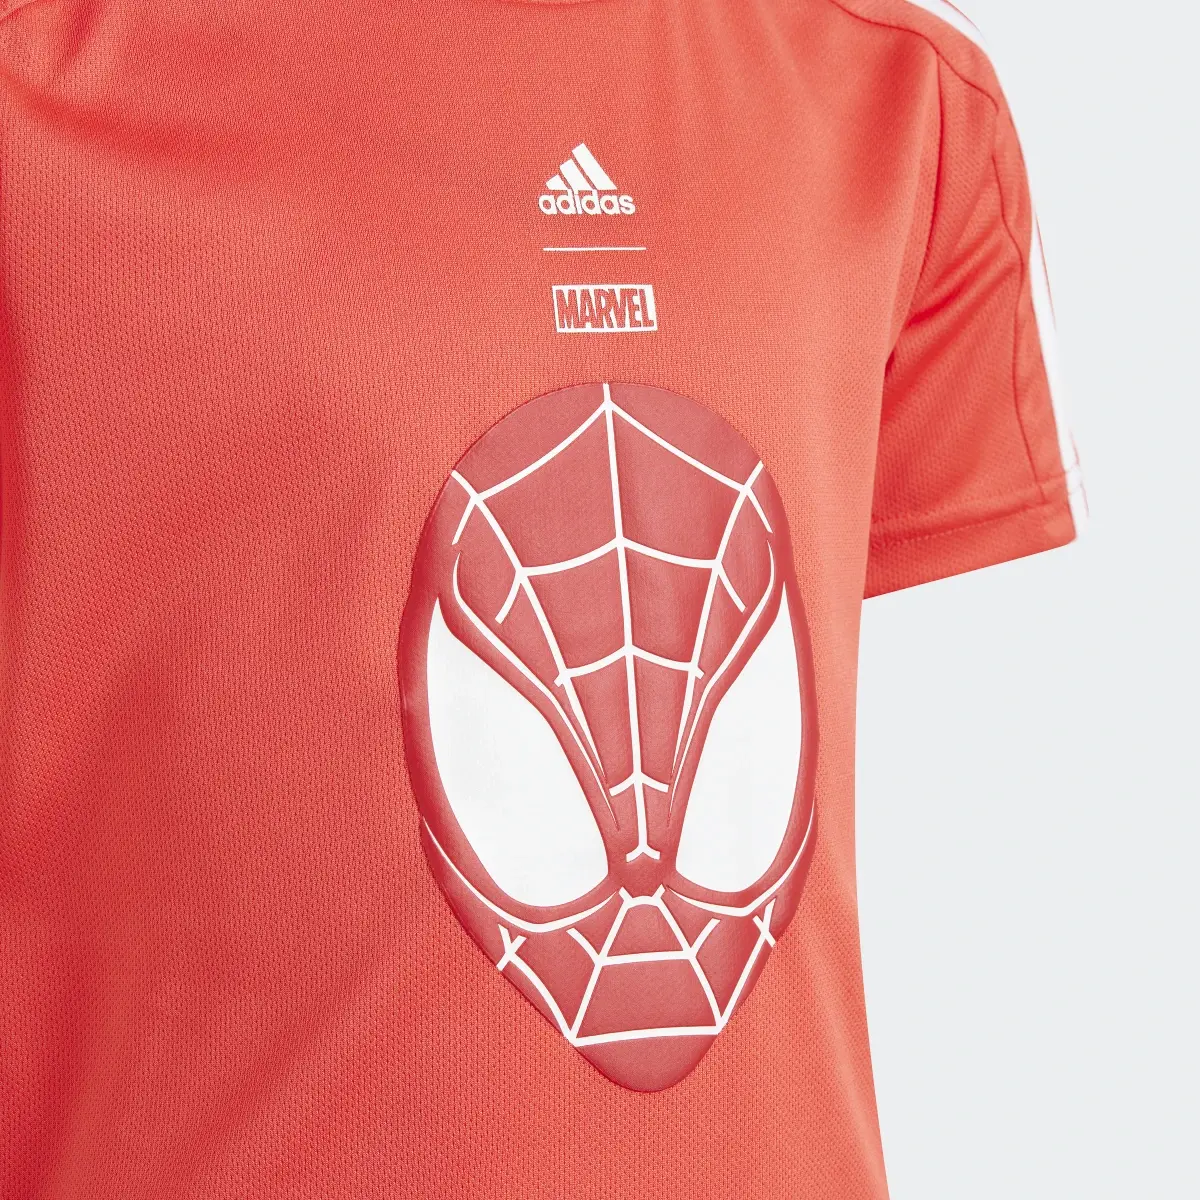 Adidas x Marvel Spider-Man Tee. 3